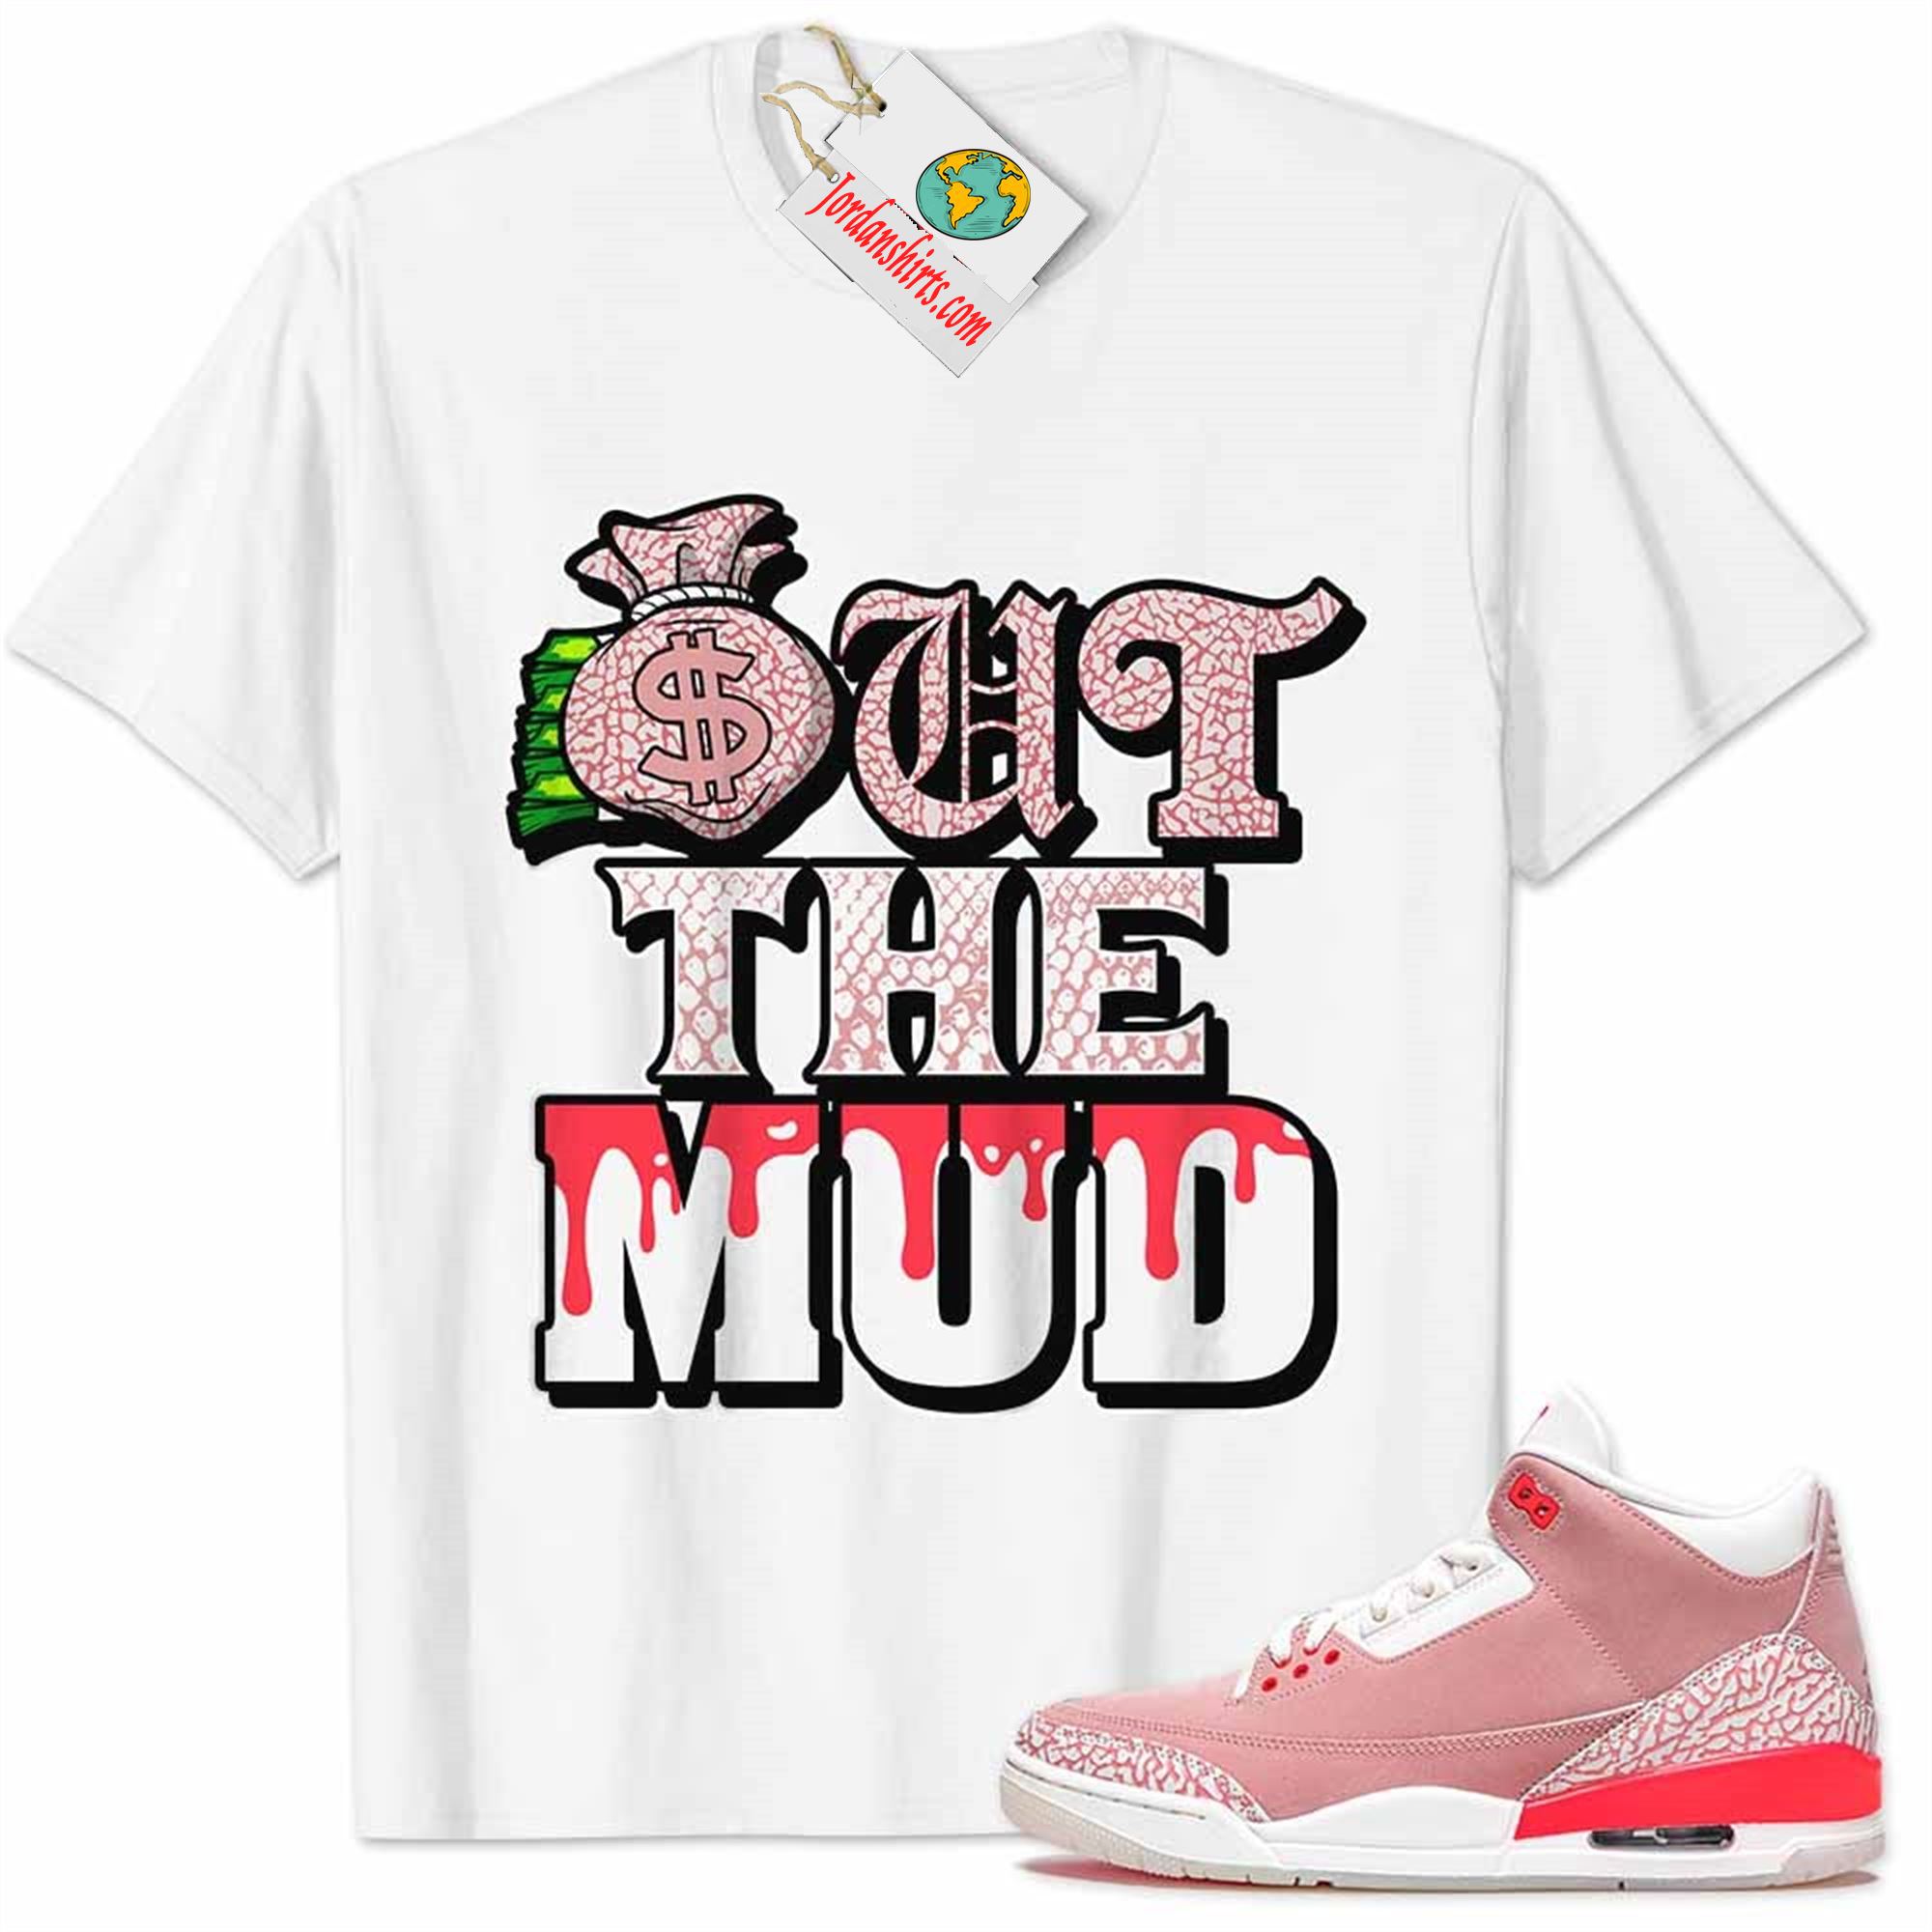 Jordan 3 Shirt, Jordan 3 Rust Pink Shirt Out The Mud Money Bag White Plus Size Up To 5xl